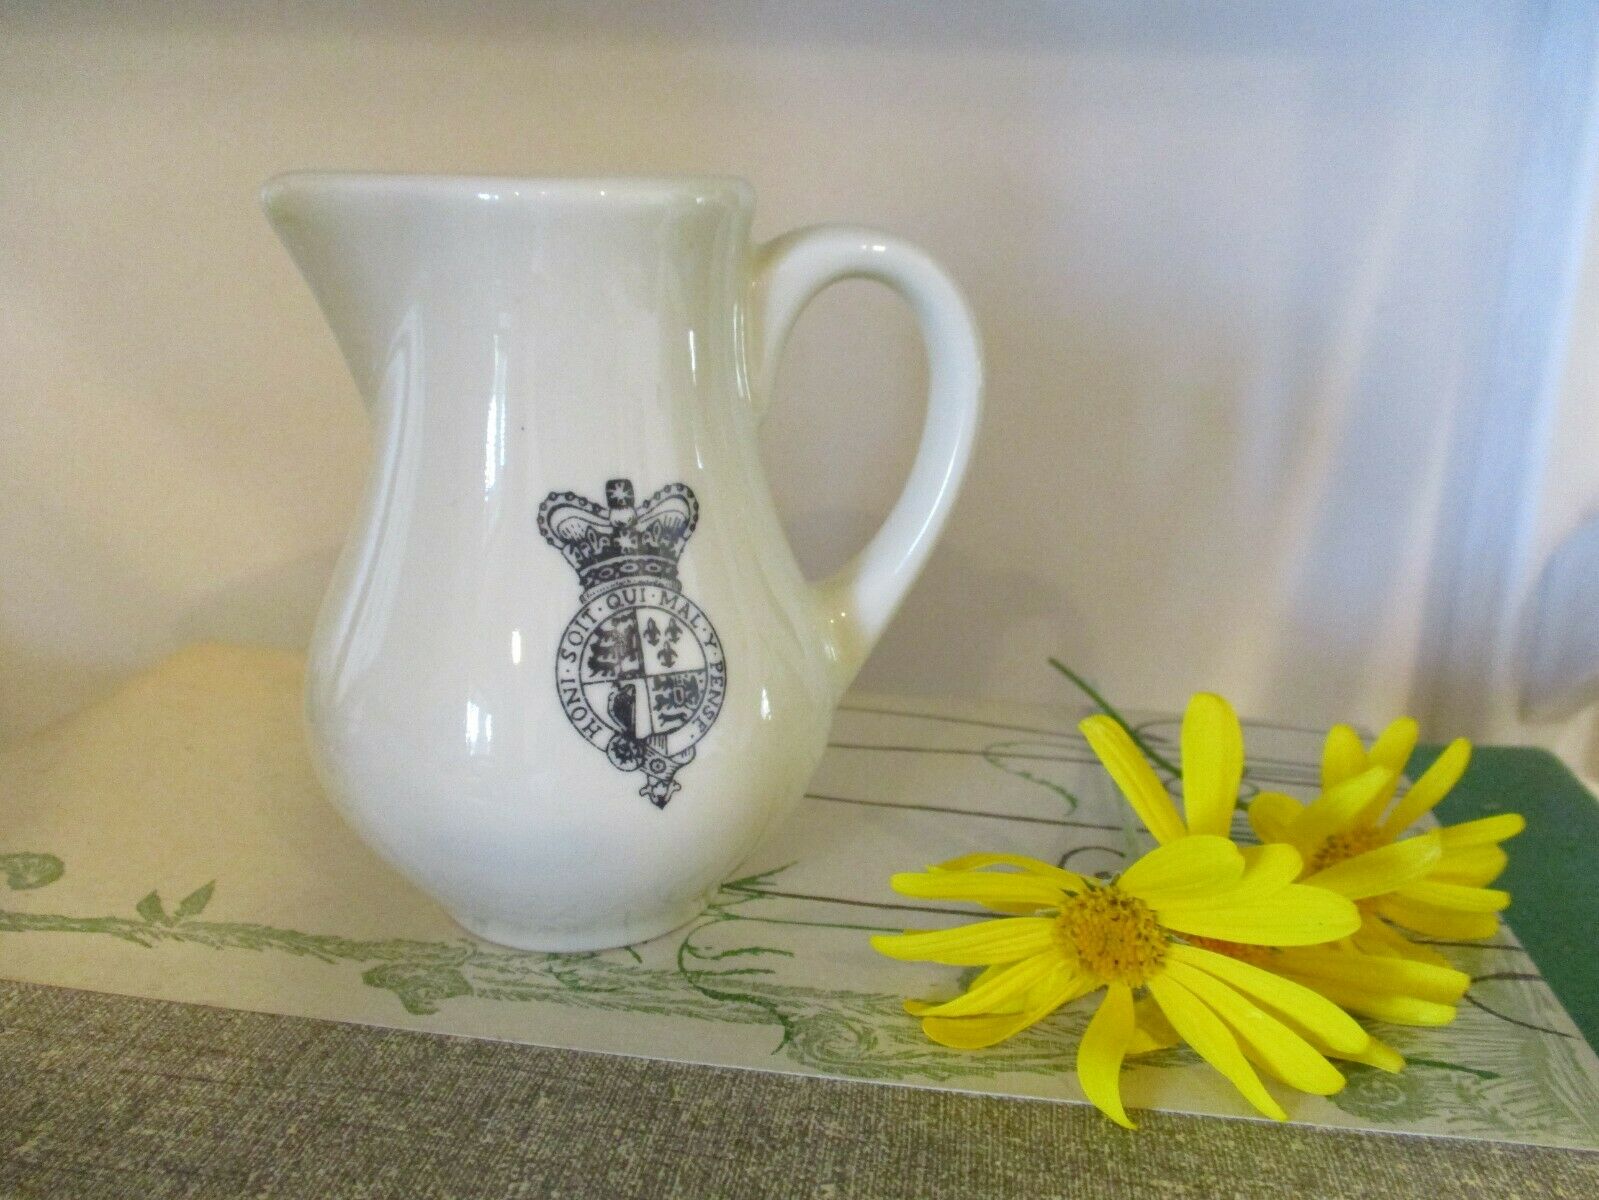 Vtg British Royal Army Emblem Commemorative Serving Creamer English Pottery Vase